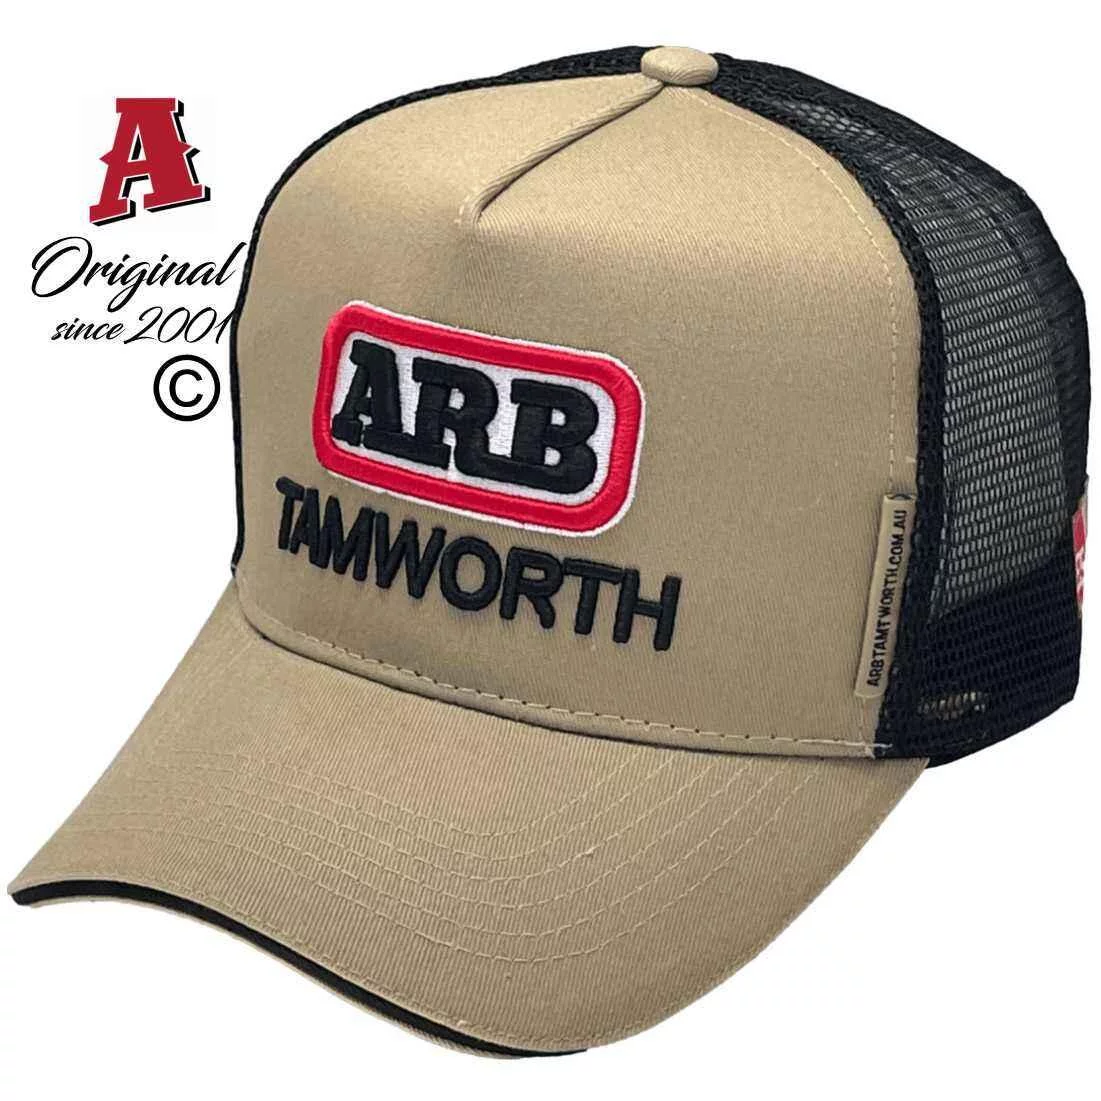 ARB Tamworth NSW Midrange Aussie Trucker Hats HP with Double Side Bands and Australian HeadFit Crown & Sandwich Brim Khaki Black